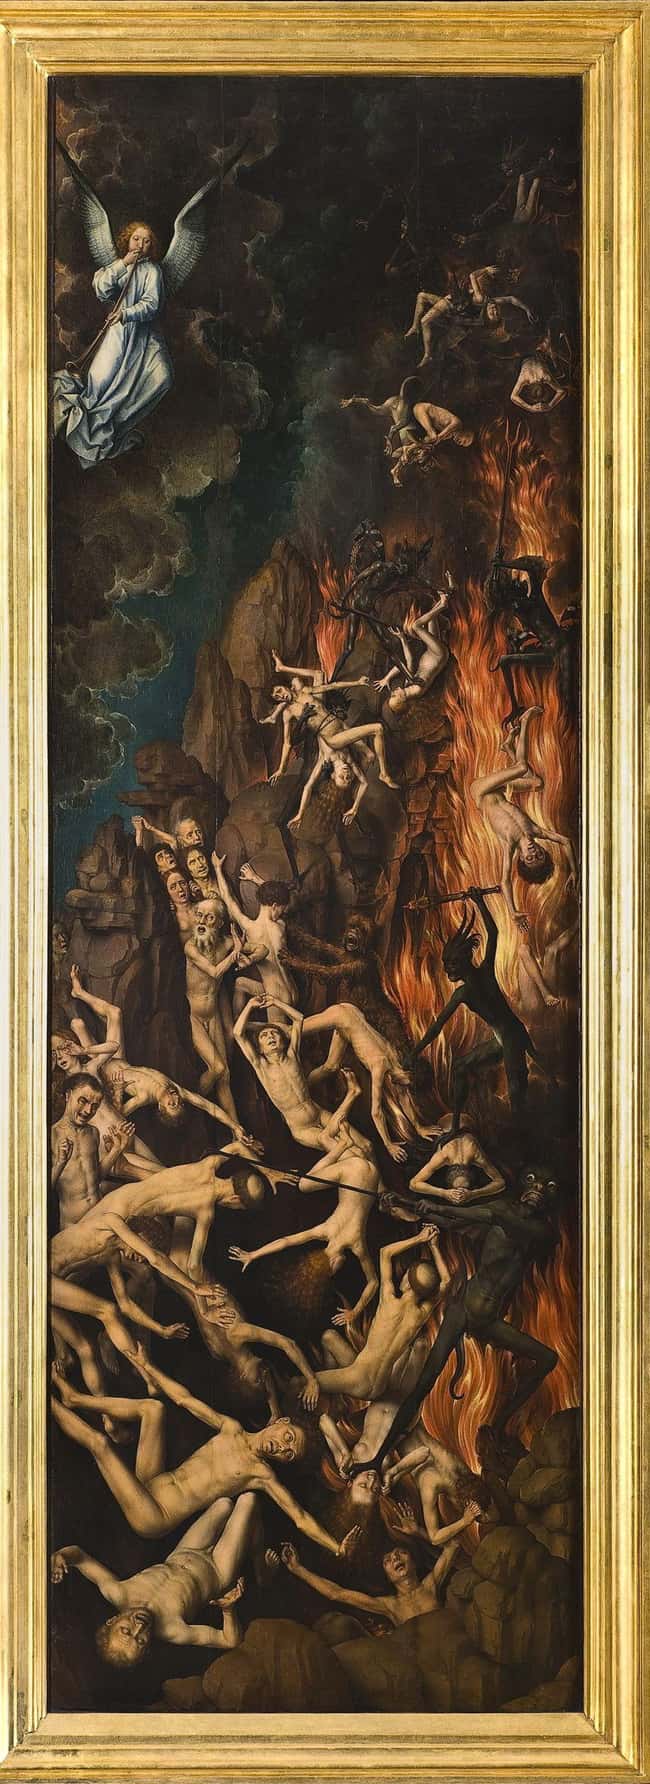 visual representation of hell